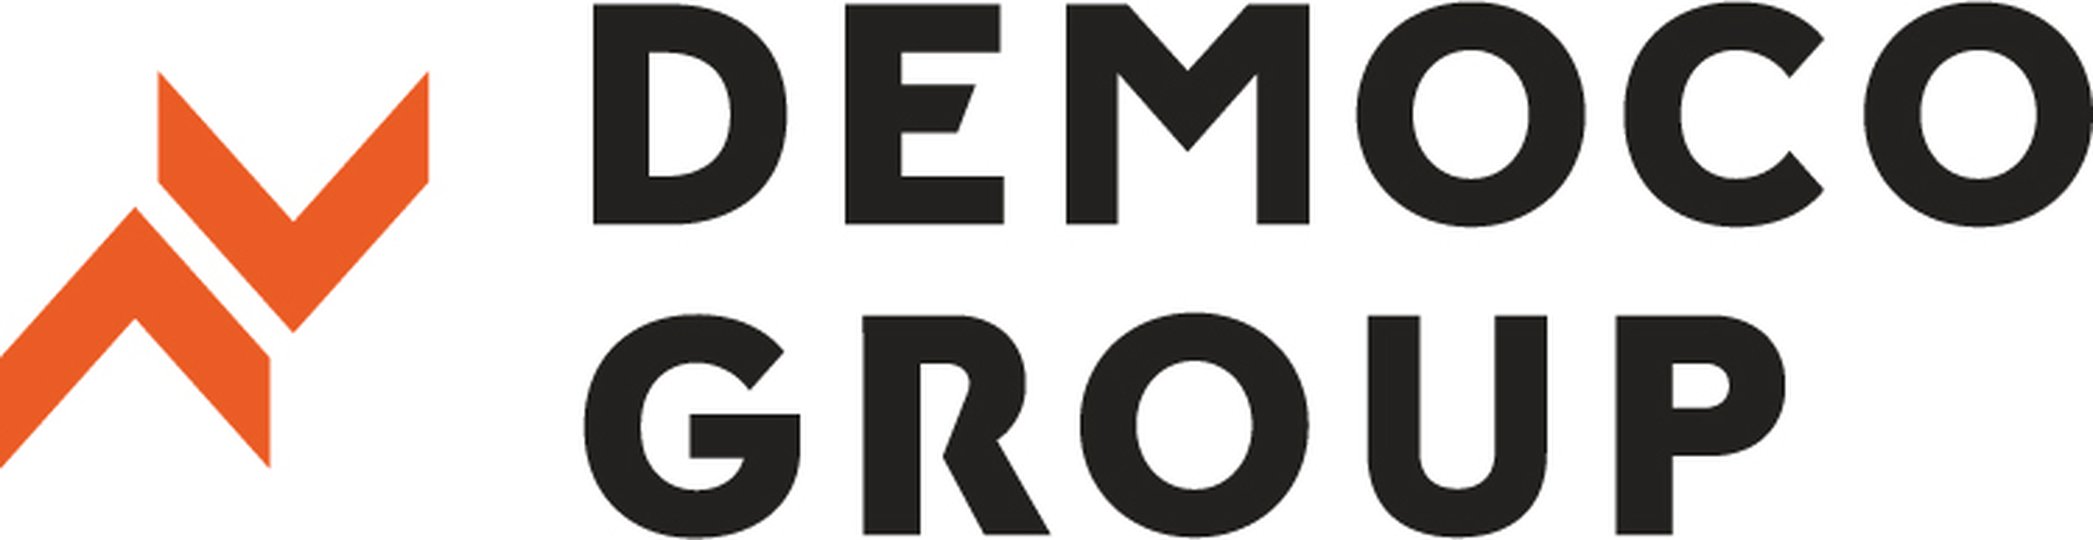 Democo Group